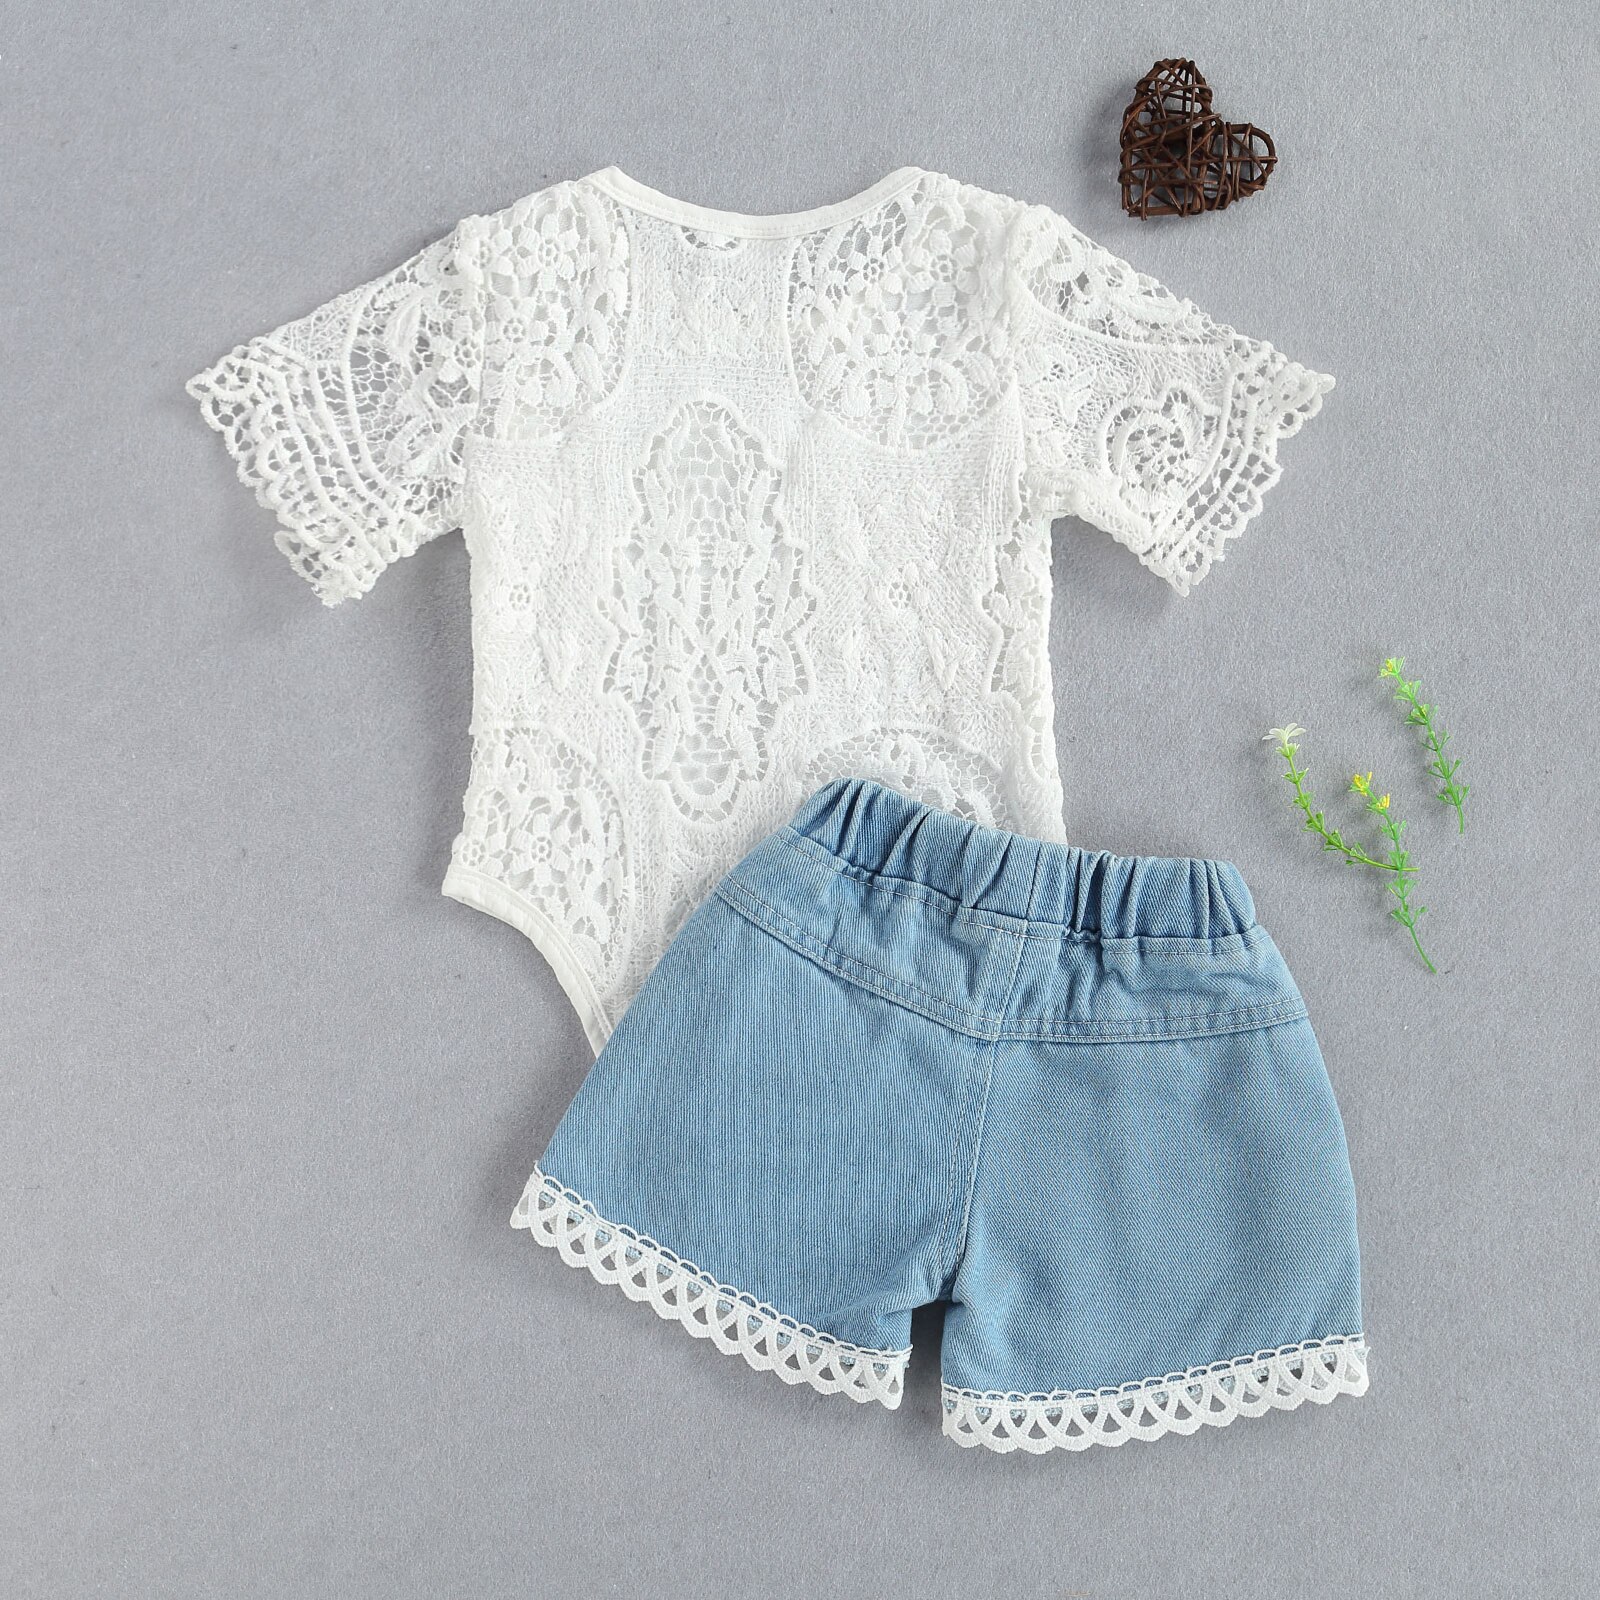 Fashion-Infant-Newborn-Baby-Girls-Summer-Clothes-Sets-White-Lace-Flowers-Bodysuits-Top-Elastic-Denim-Shorts-5